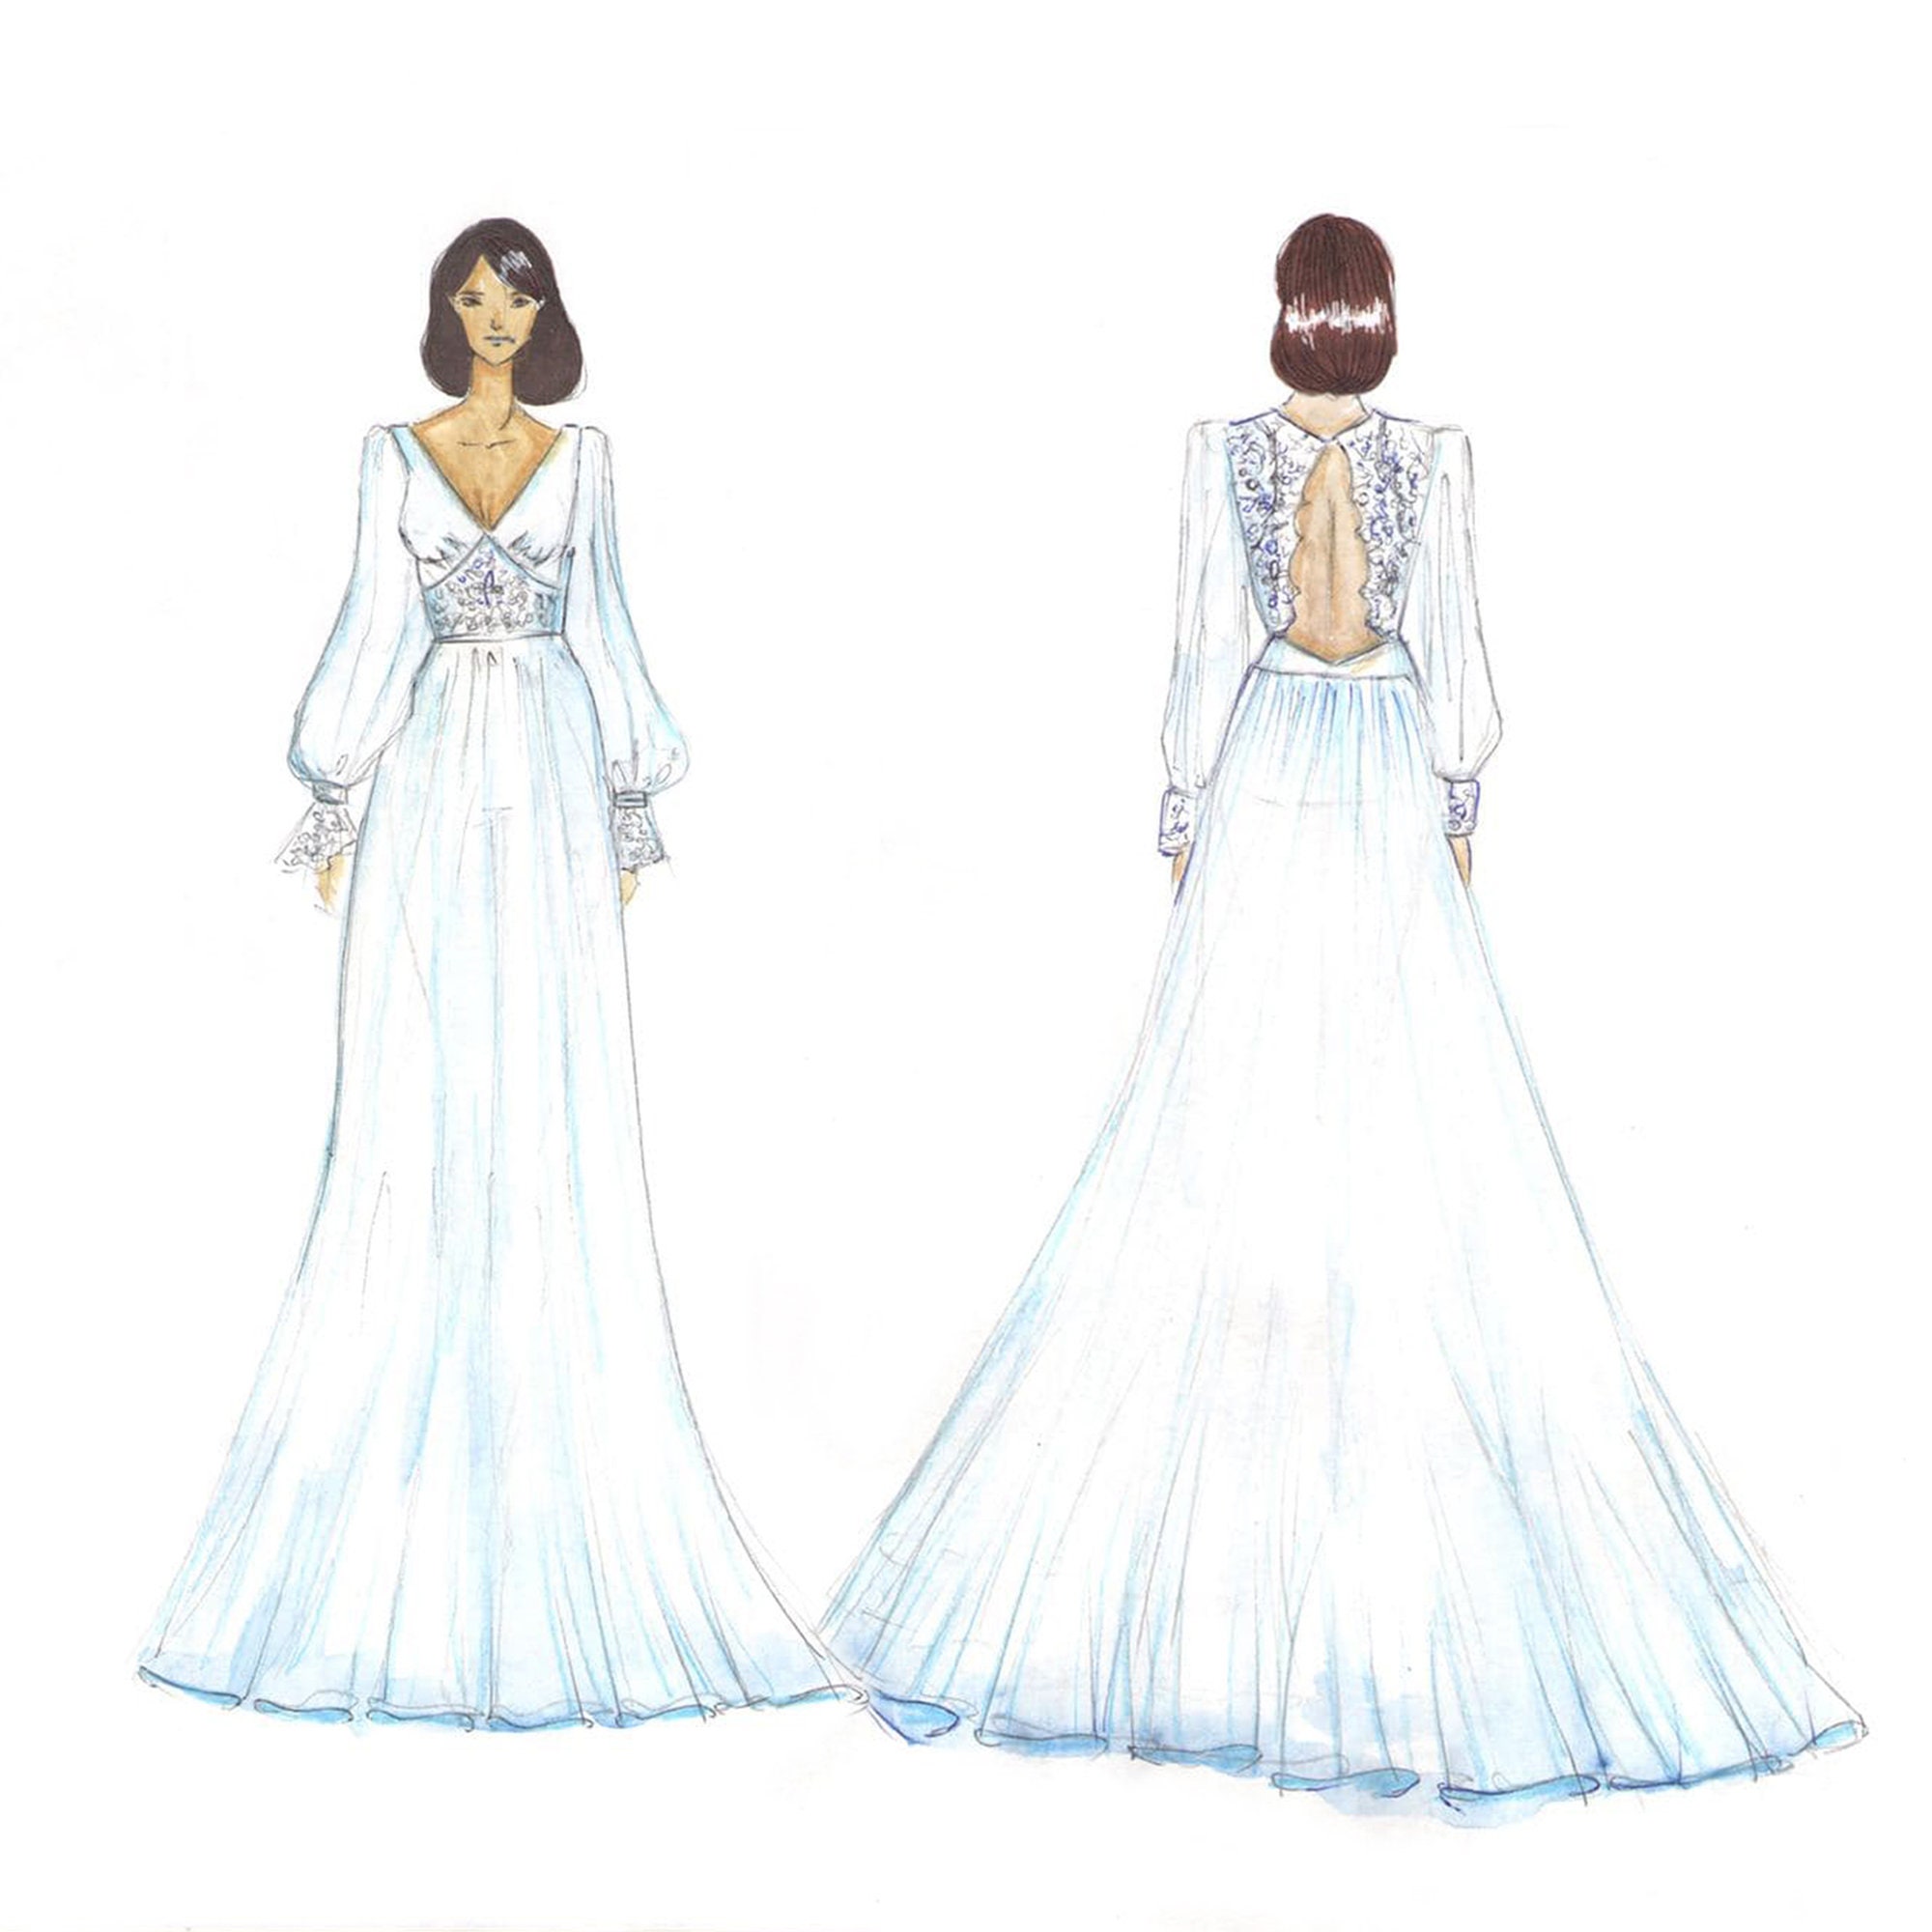 pgmdress Mermaid Ivory Lace Sweep/Brush Train Scoop Long Sleeve Wedding Dress US4 / Custom Color